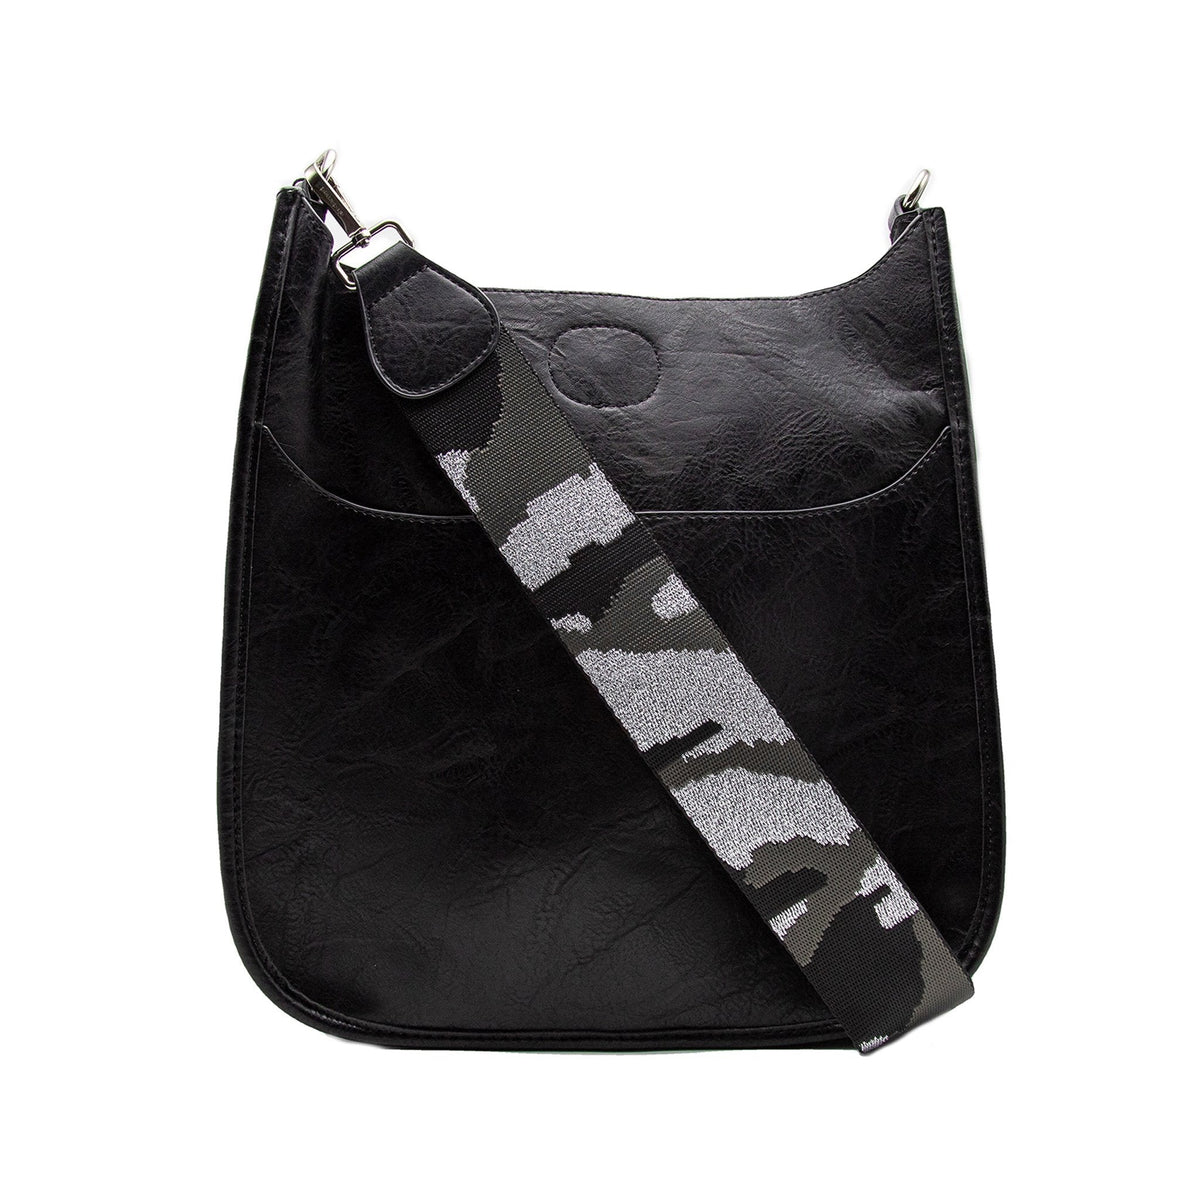 AH-DORNED Mini Vegan Crossbody Bag in Black With Three Straps in EUC.